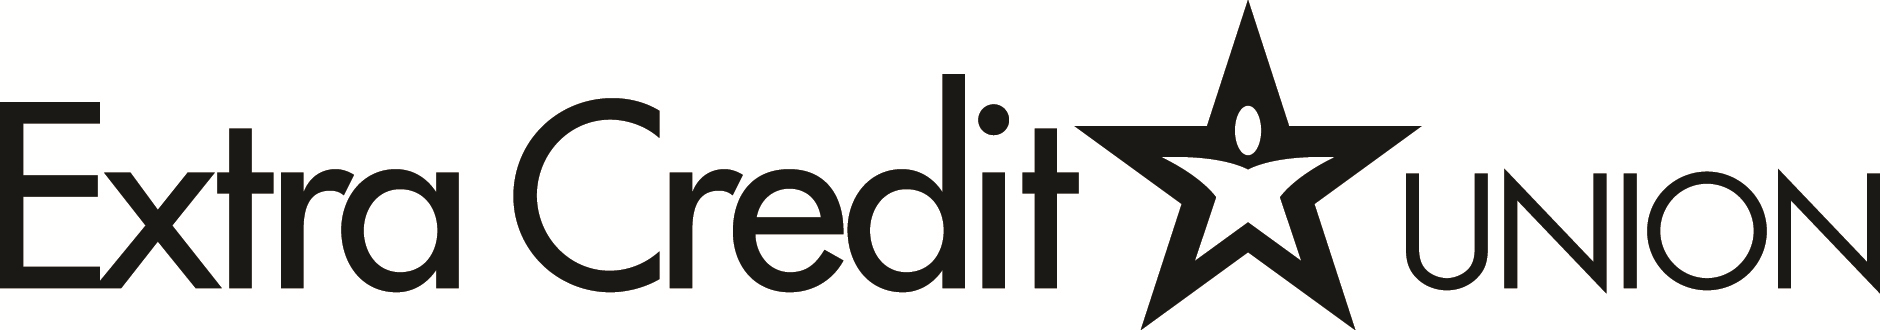 Extra Credit Union logo